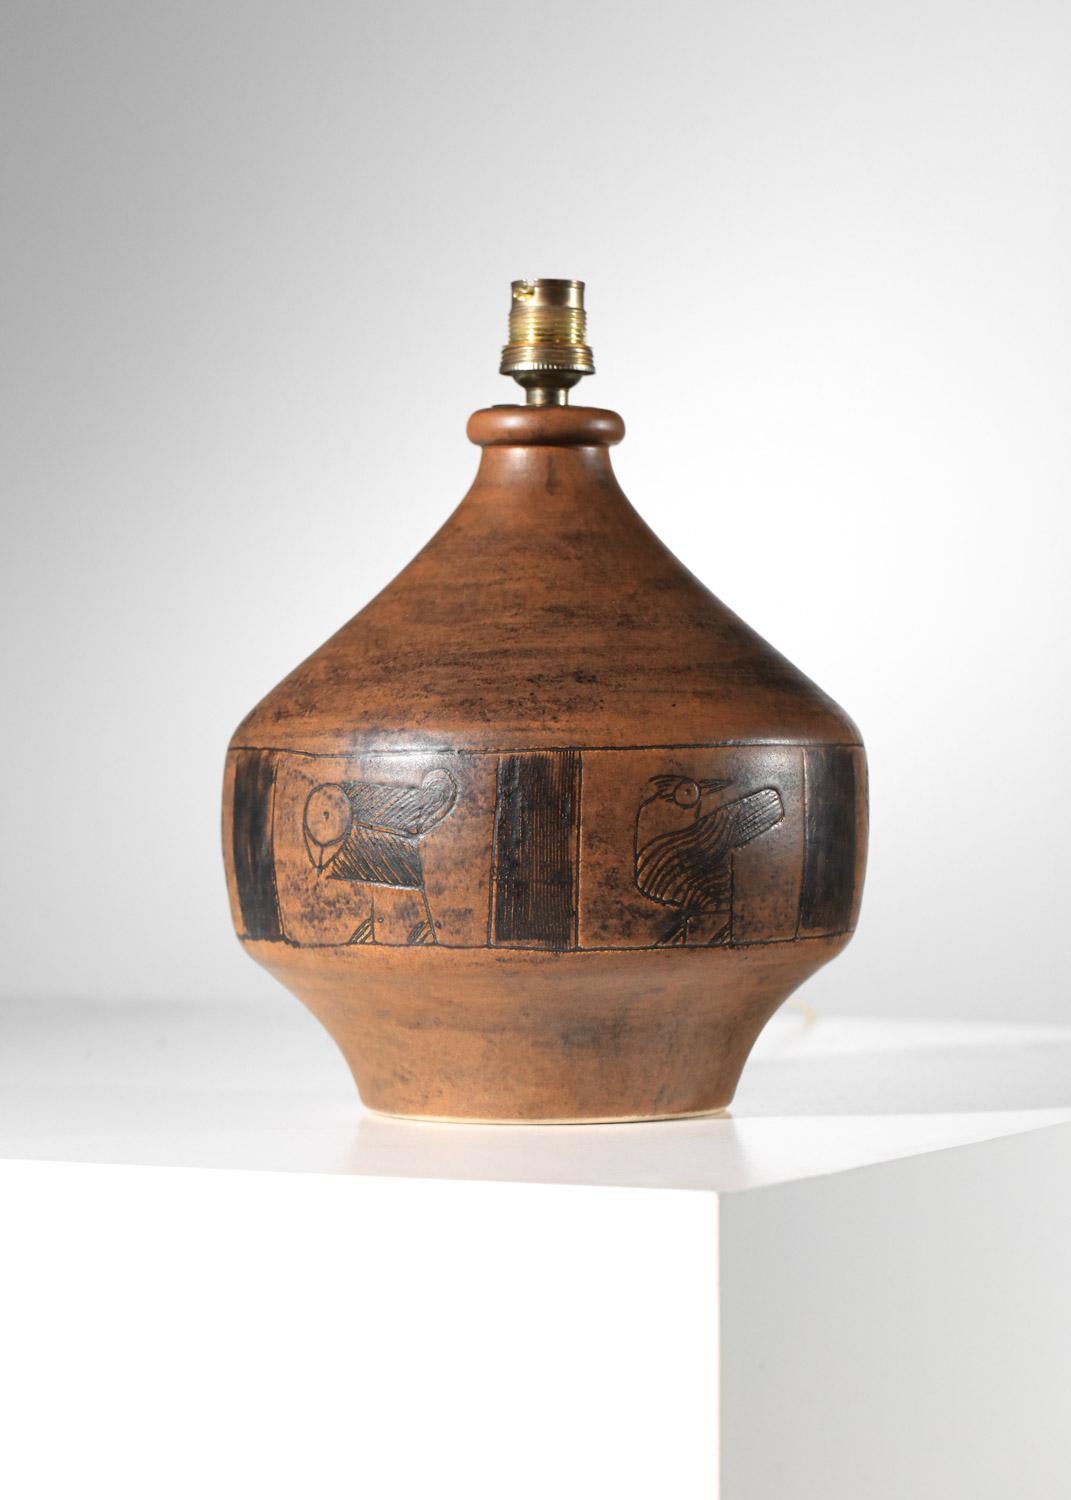 Jacques blin brown ceramic lamp with bird design   5